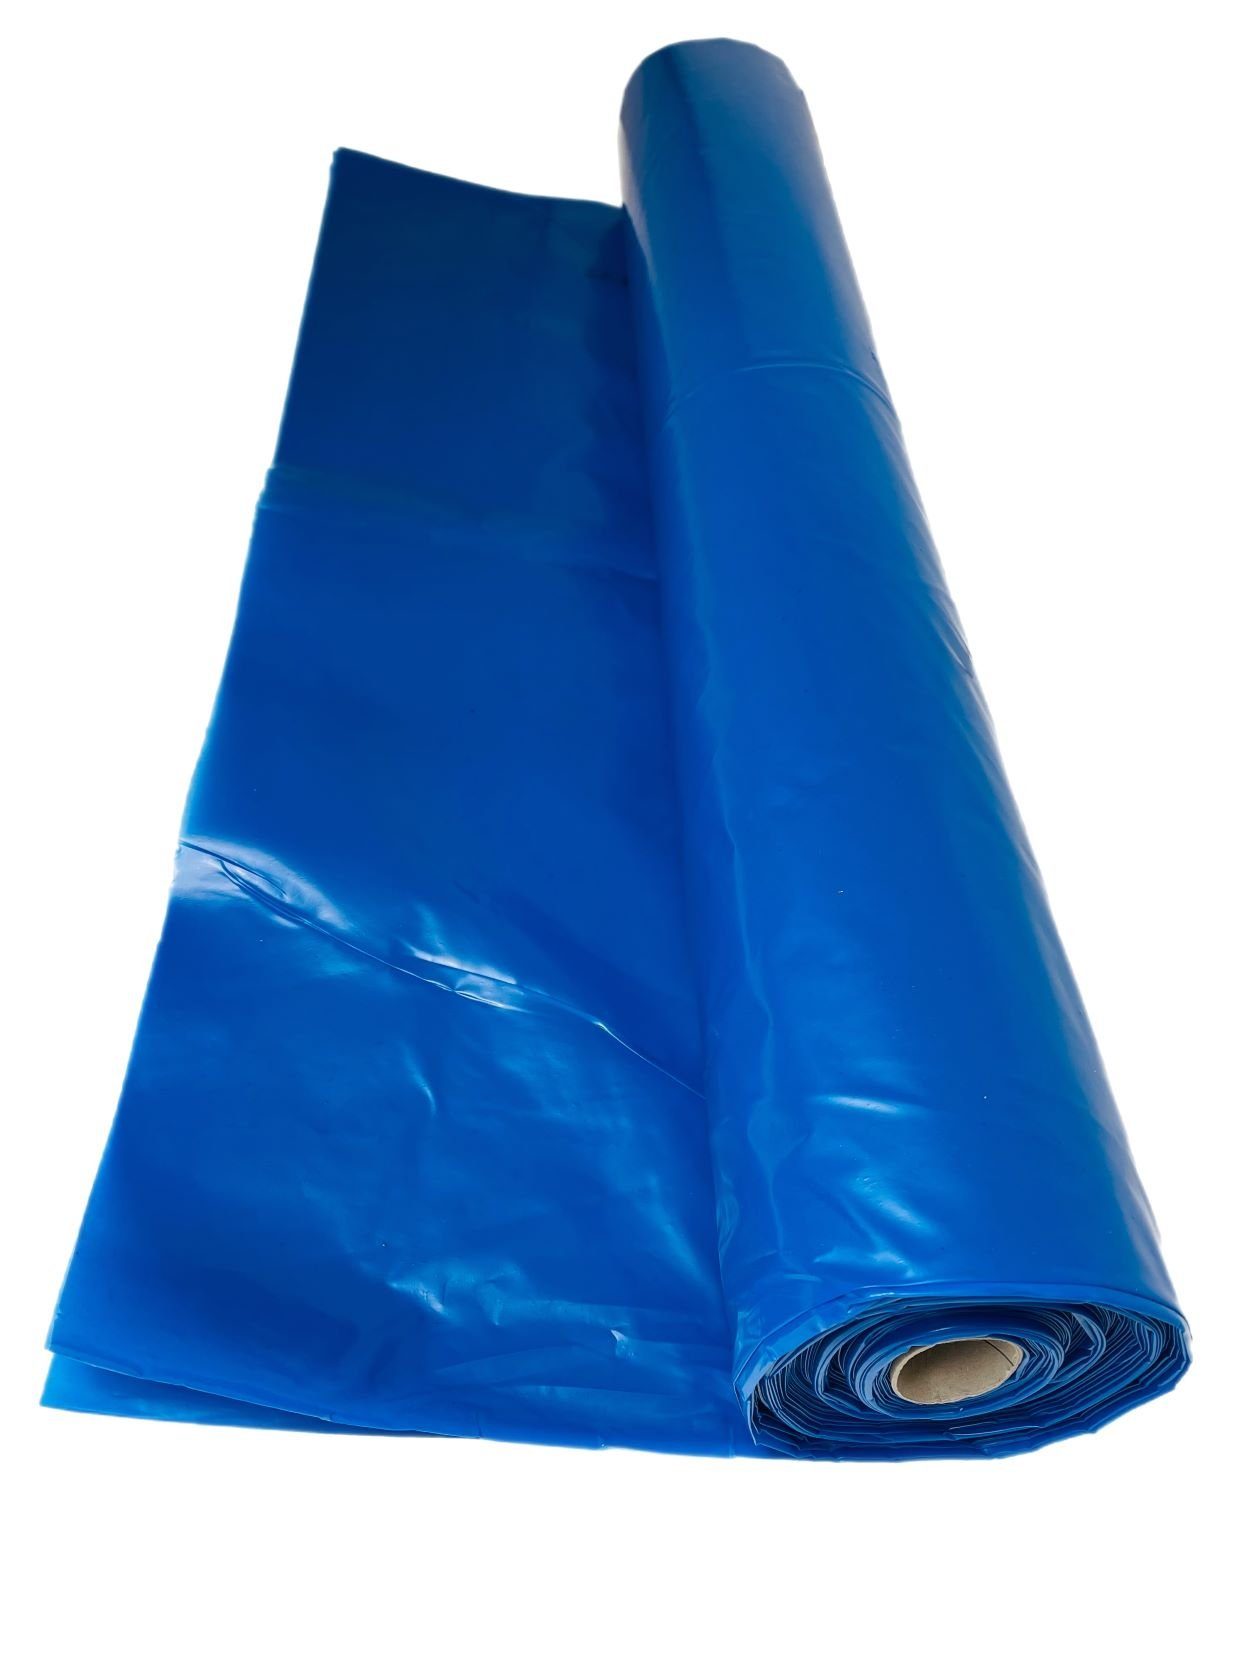 VaGo-Tools Dampfbremsfolie 1x Dampfbremse Dampfsperre 4x25m² Dampfbremsfolie Blau Dach Folie